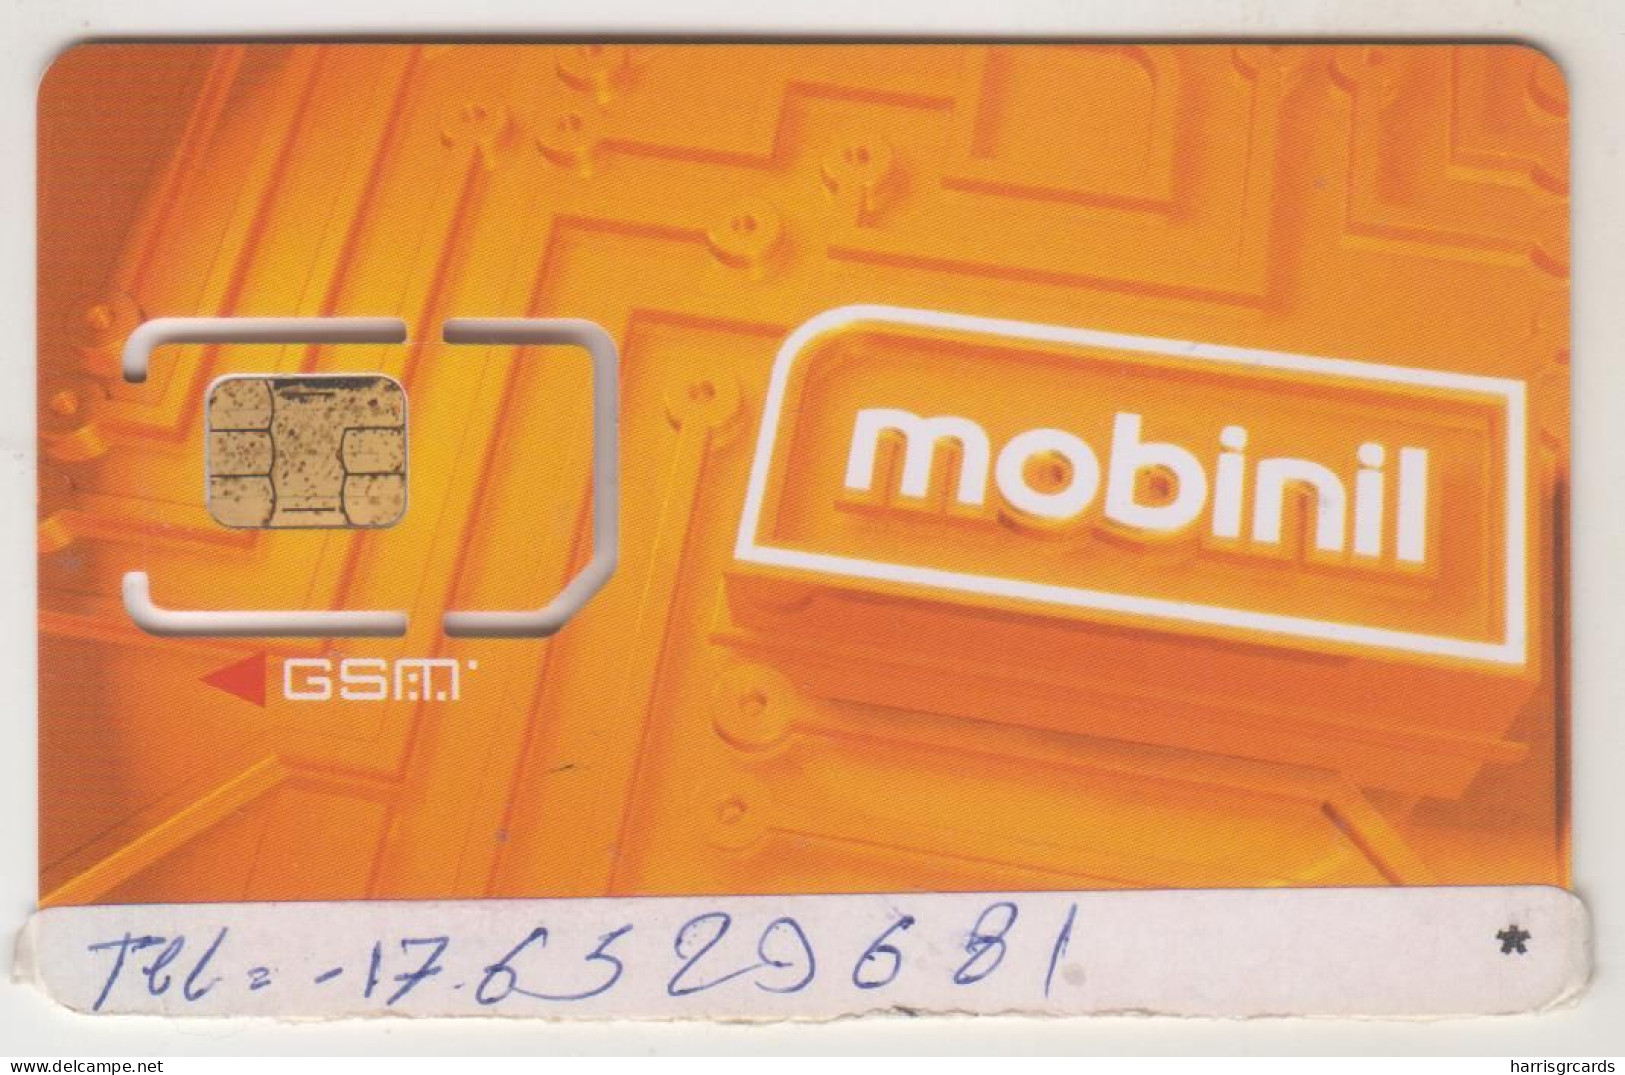 EGYPT - MobiNil GSM Card, Mint - Egypt